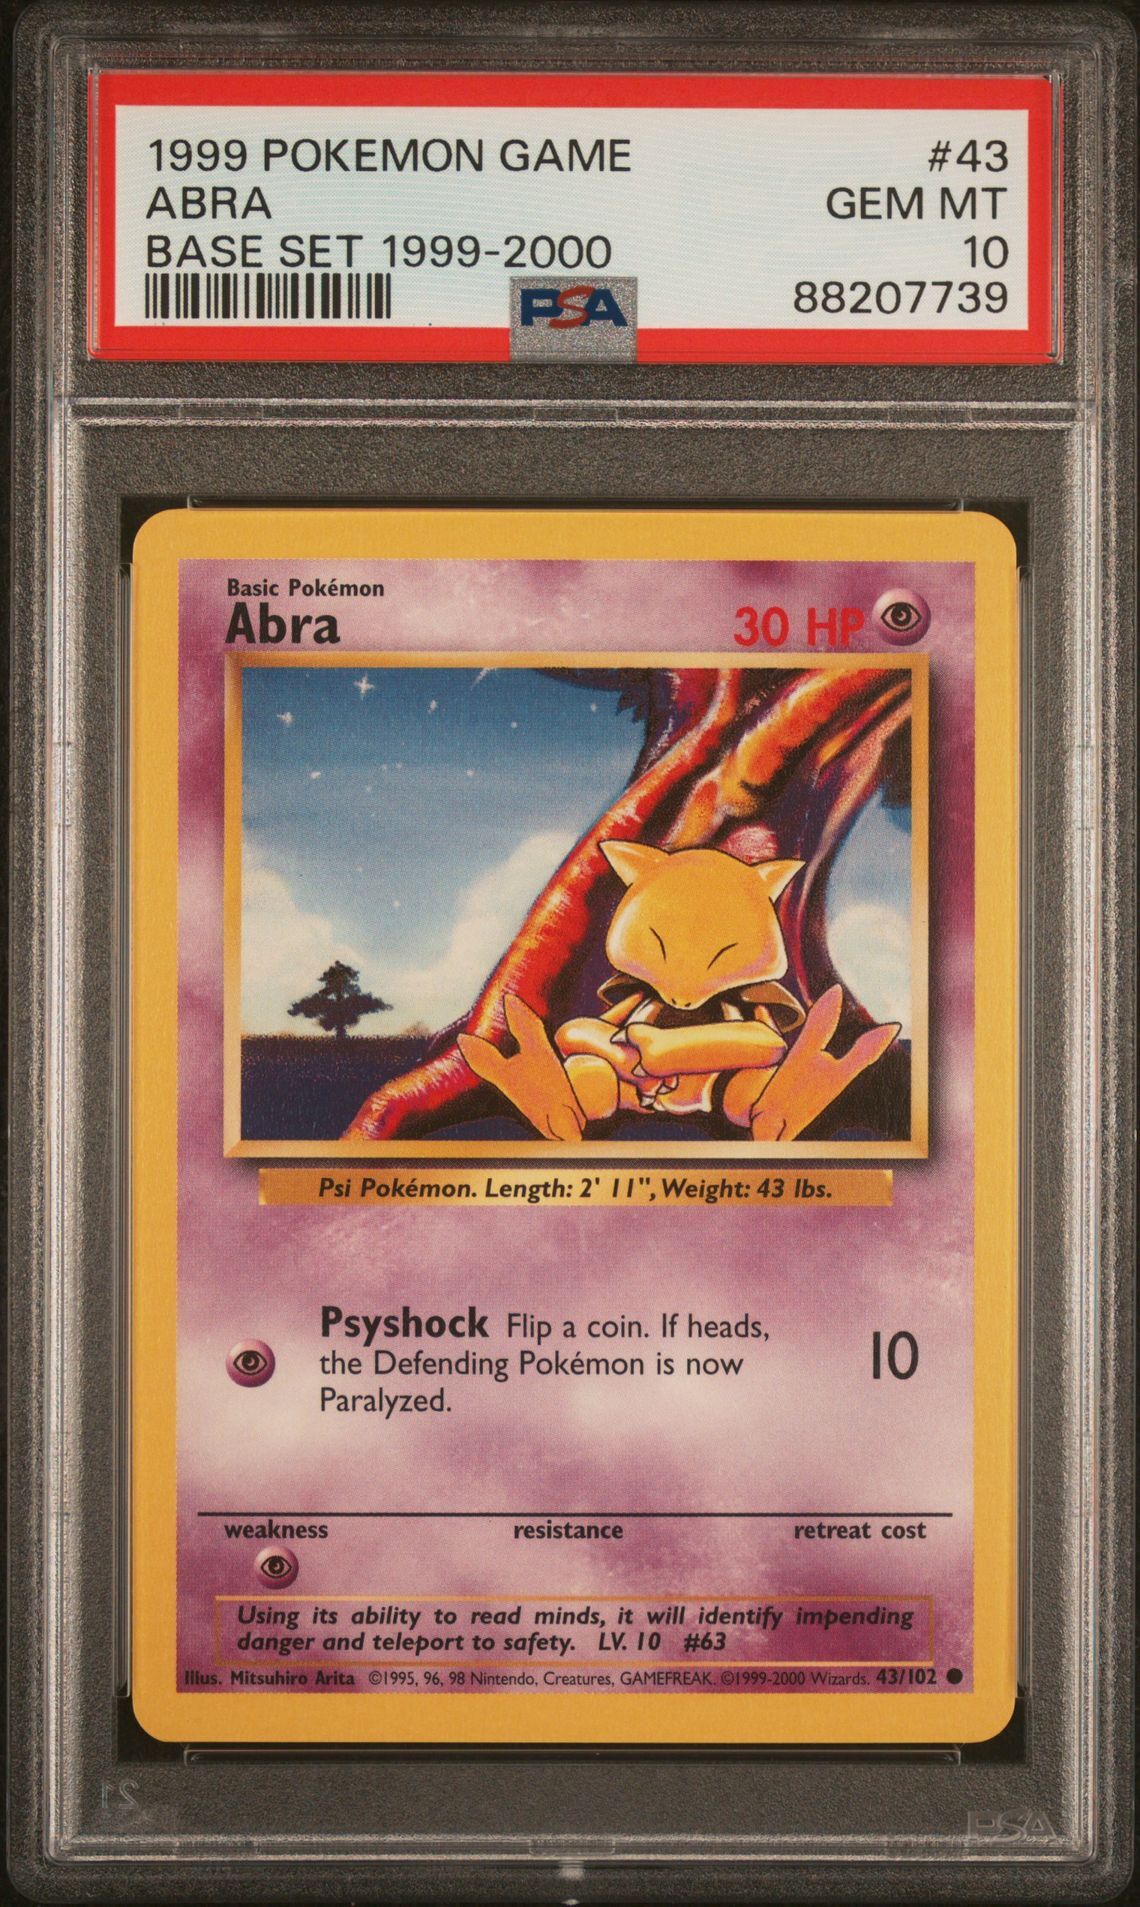 1999 POKEMON GAME 43 ABRA BASE SET 1999-2000 - PSA 10 GEM-MT - Pokémon